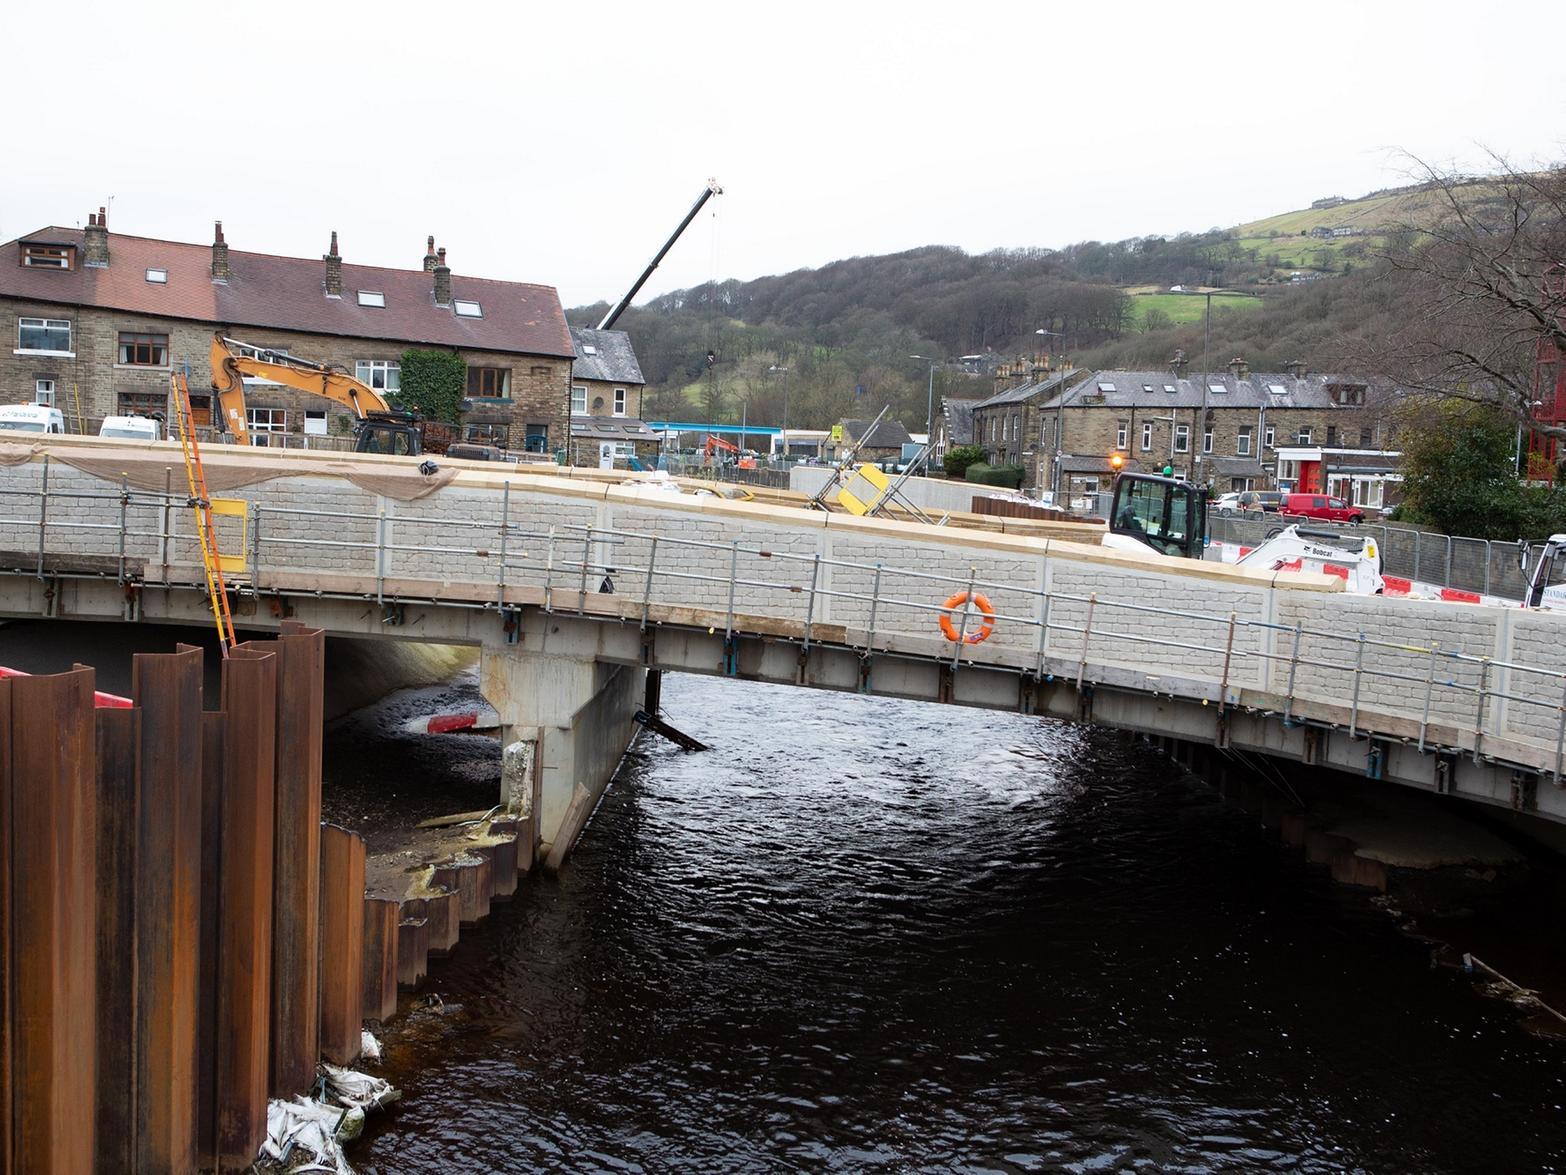 New Bridge being created in Mytholmroyd